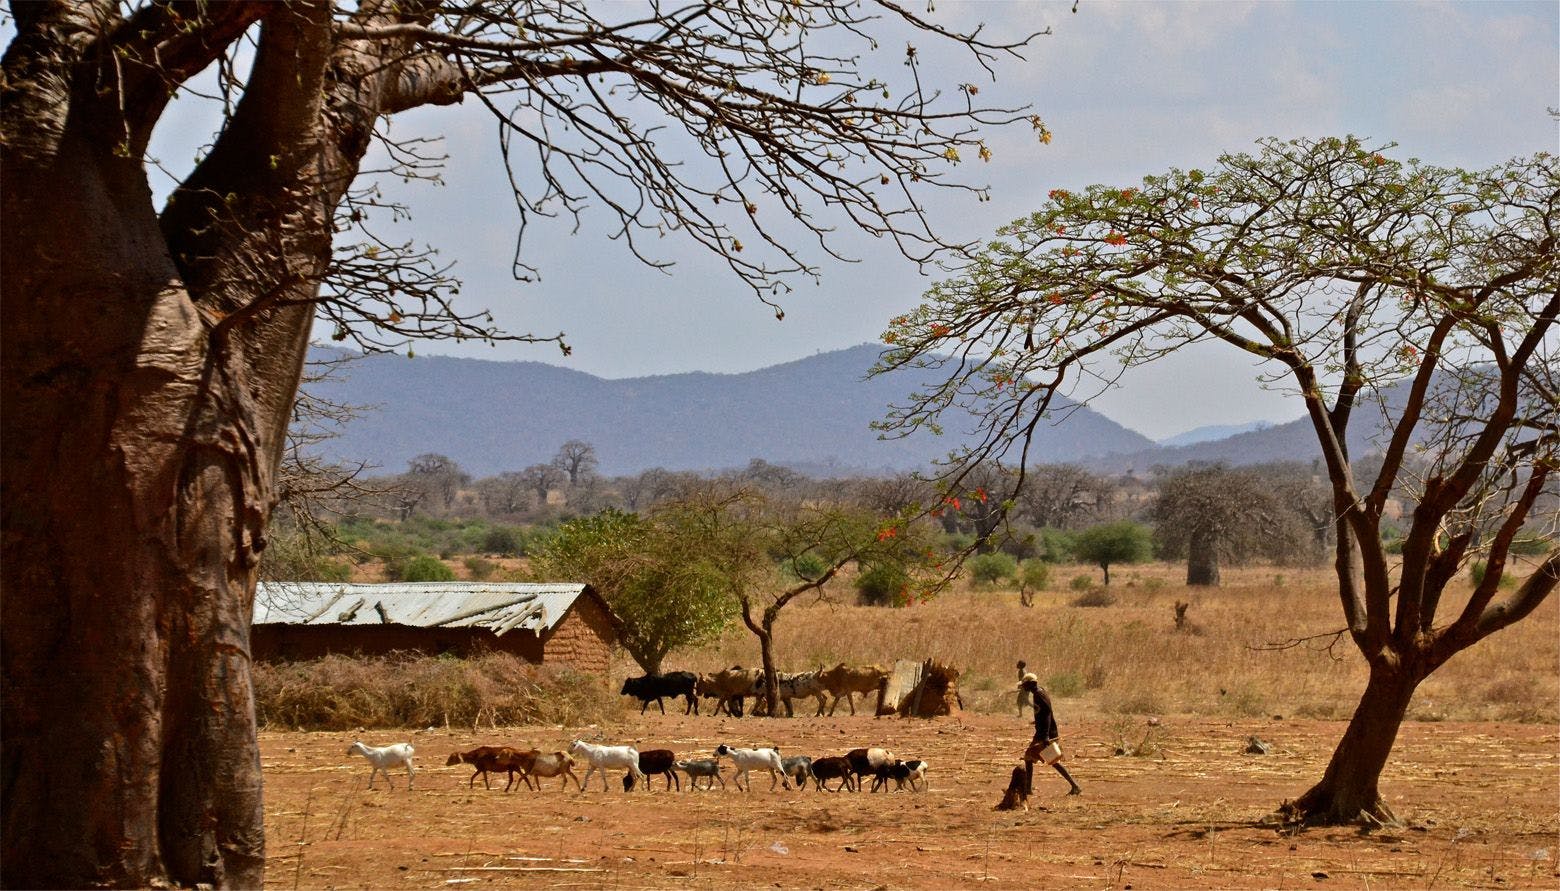 Farmland with livestock